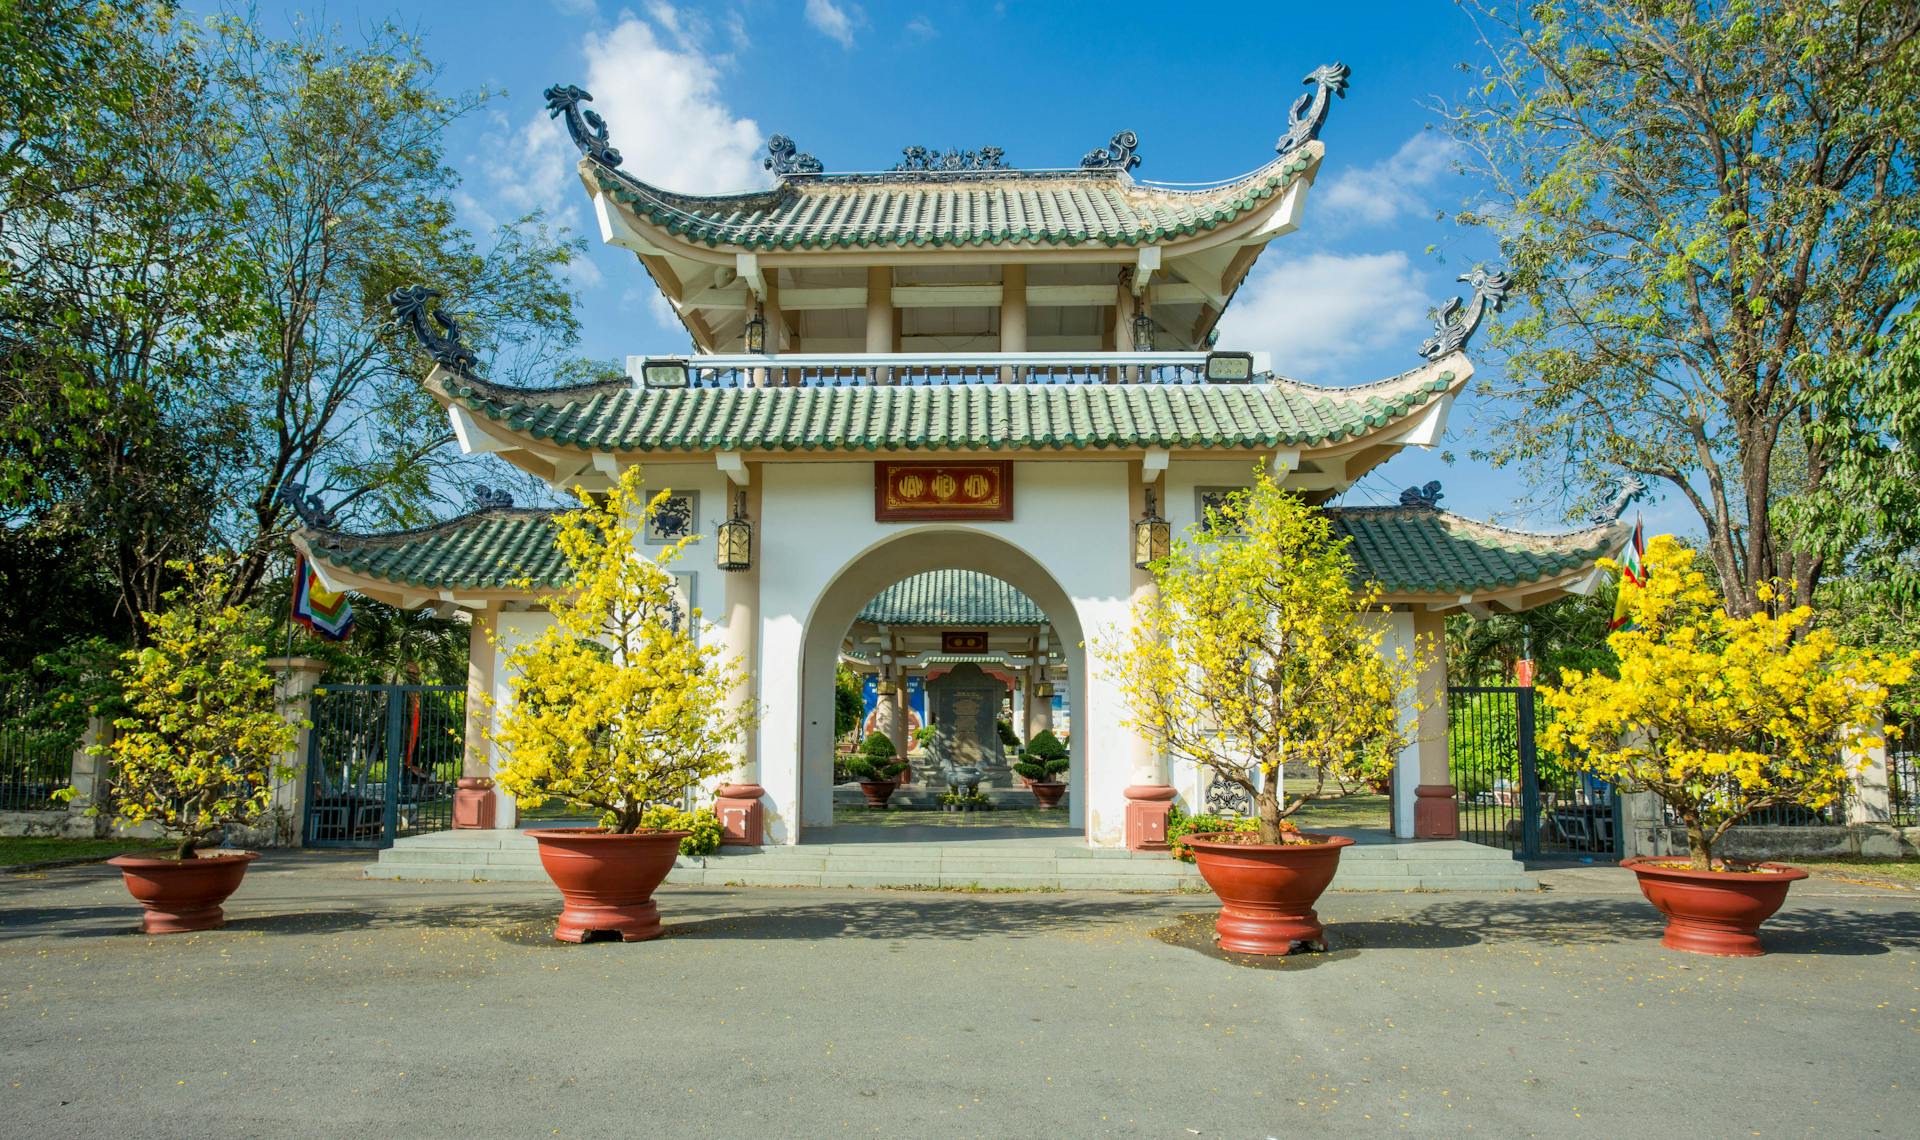 Entrance to Tran Bien Temple of Literature in Vietnam